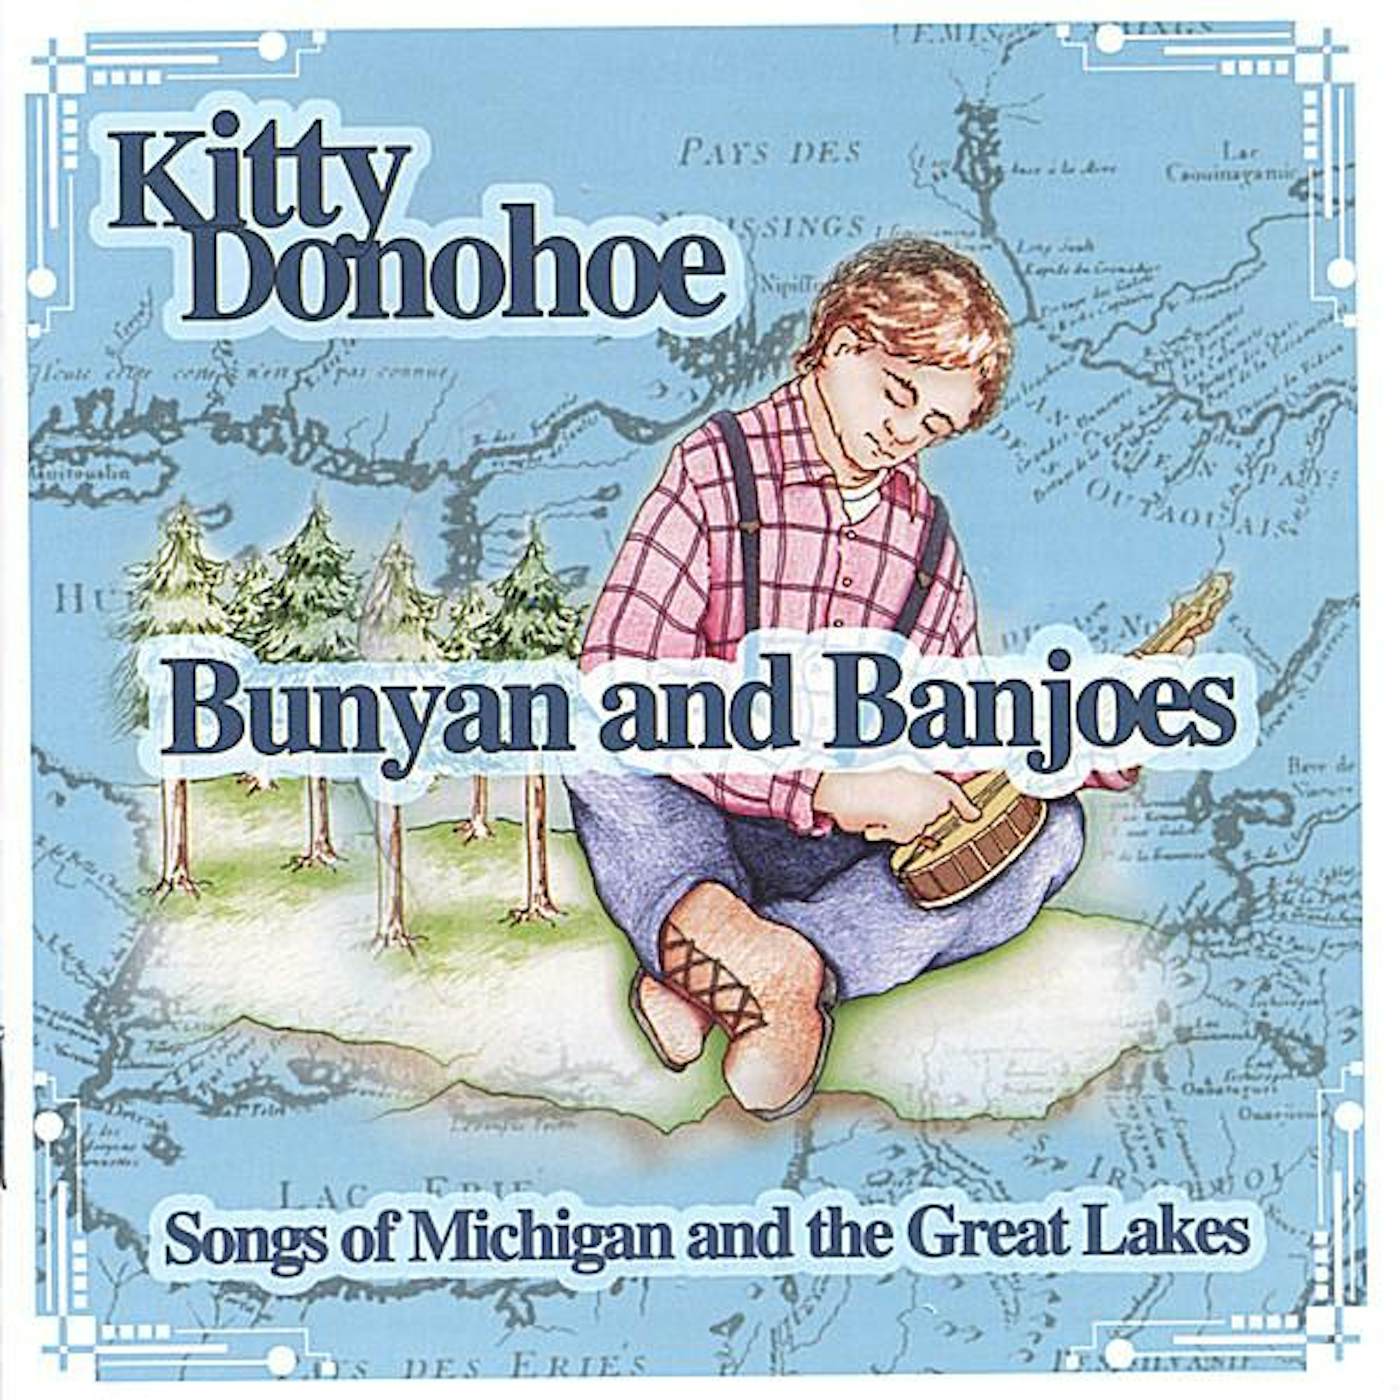 Kitty Donohoe BUNYAN & BANJOES CD